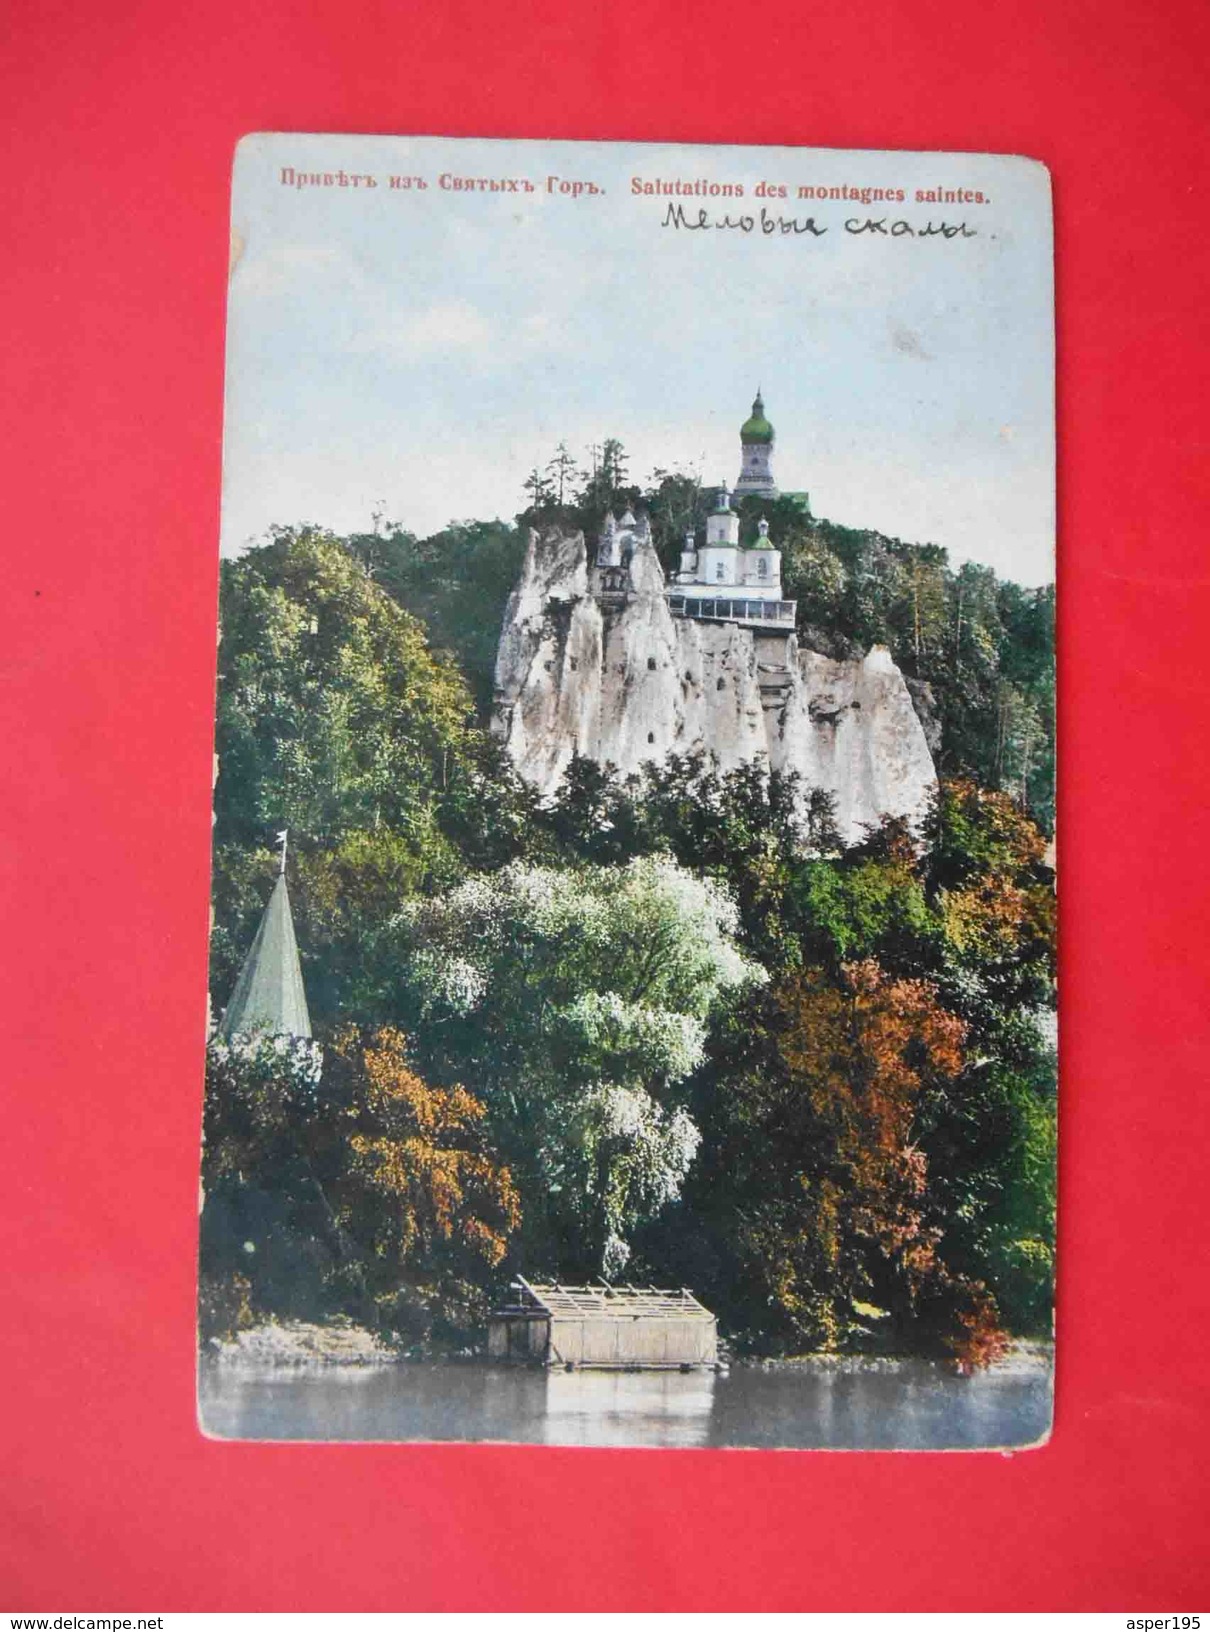 SVYATOGORSK 1910 Monastery. Old Postcard. - Ukraine